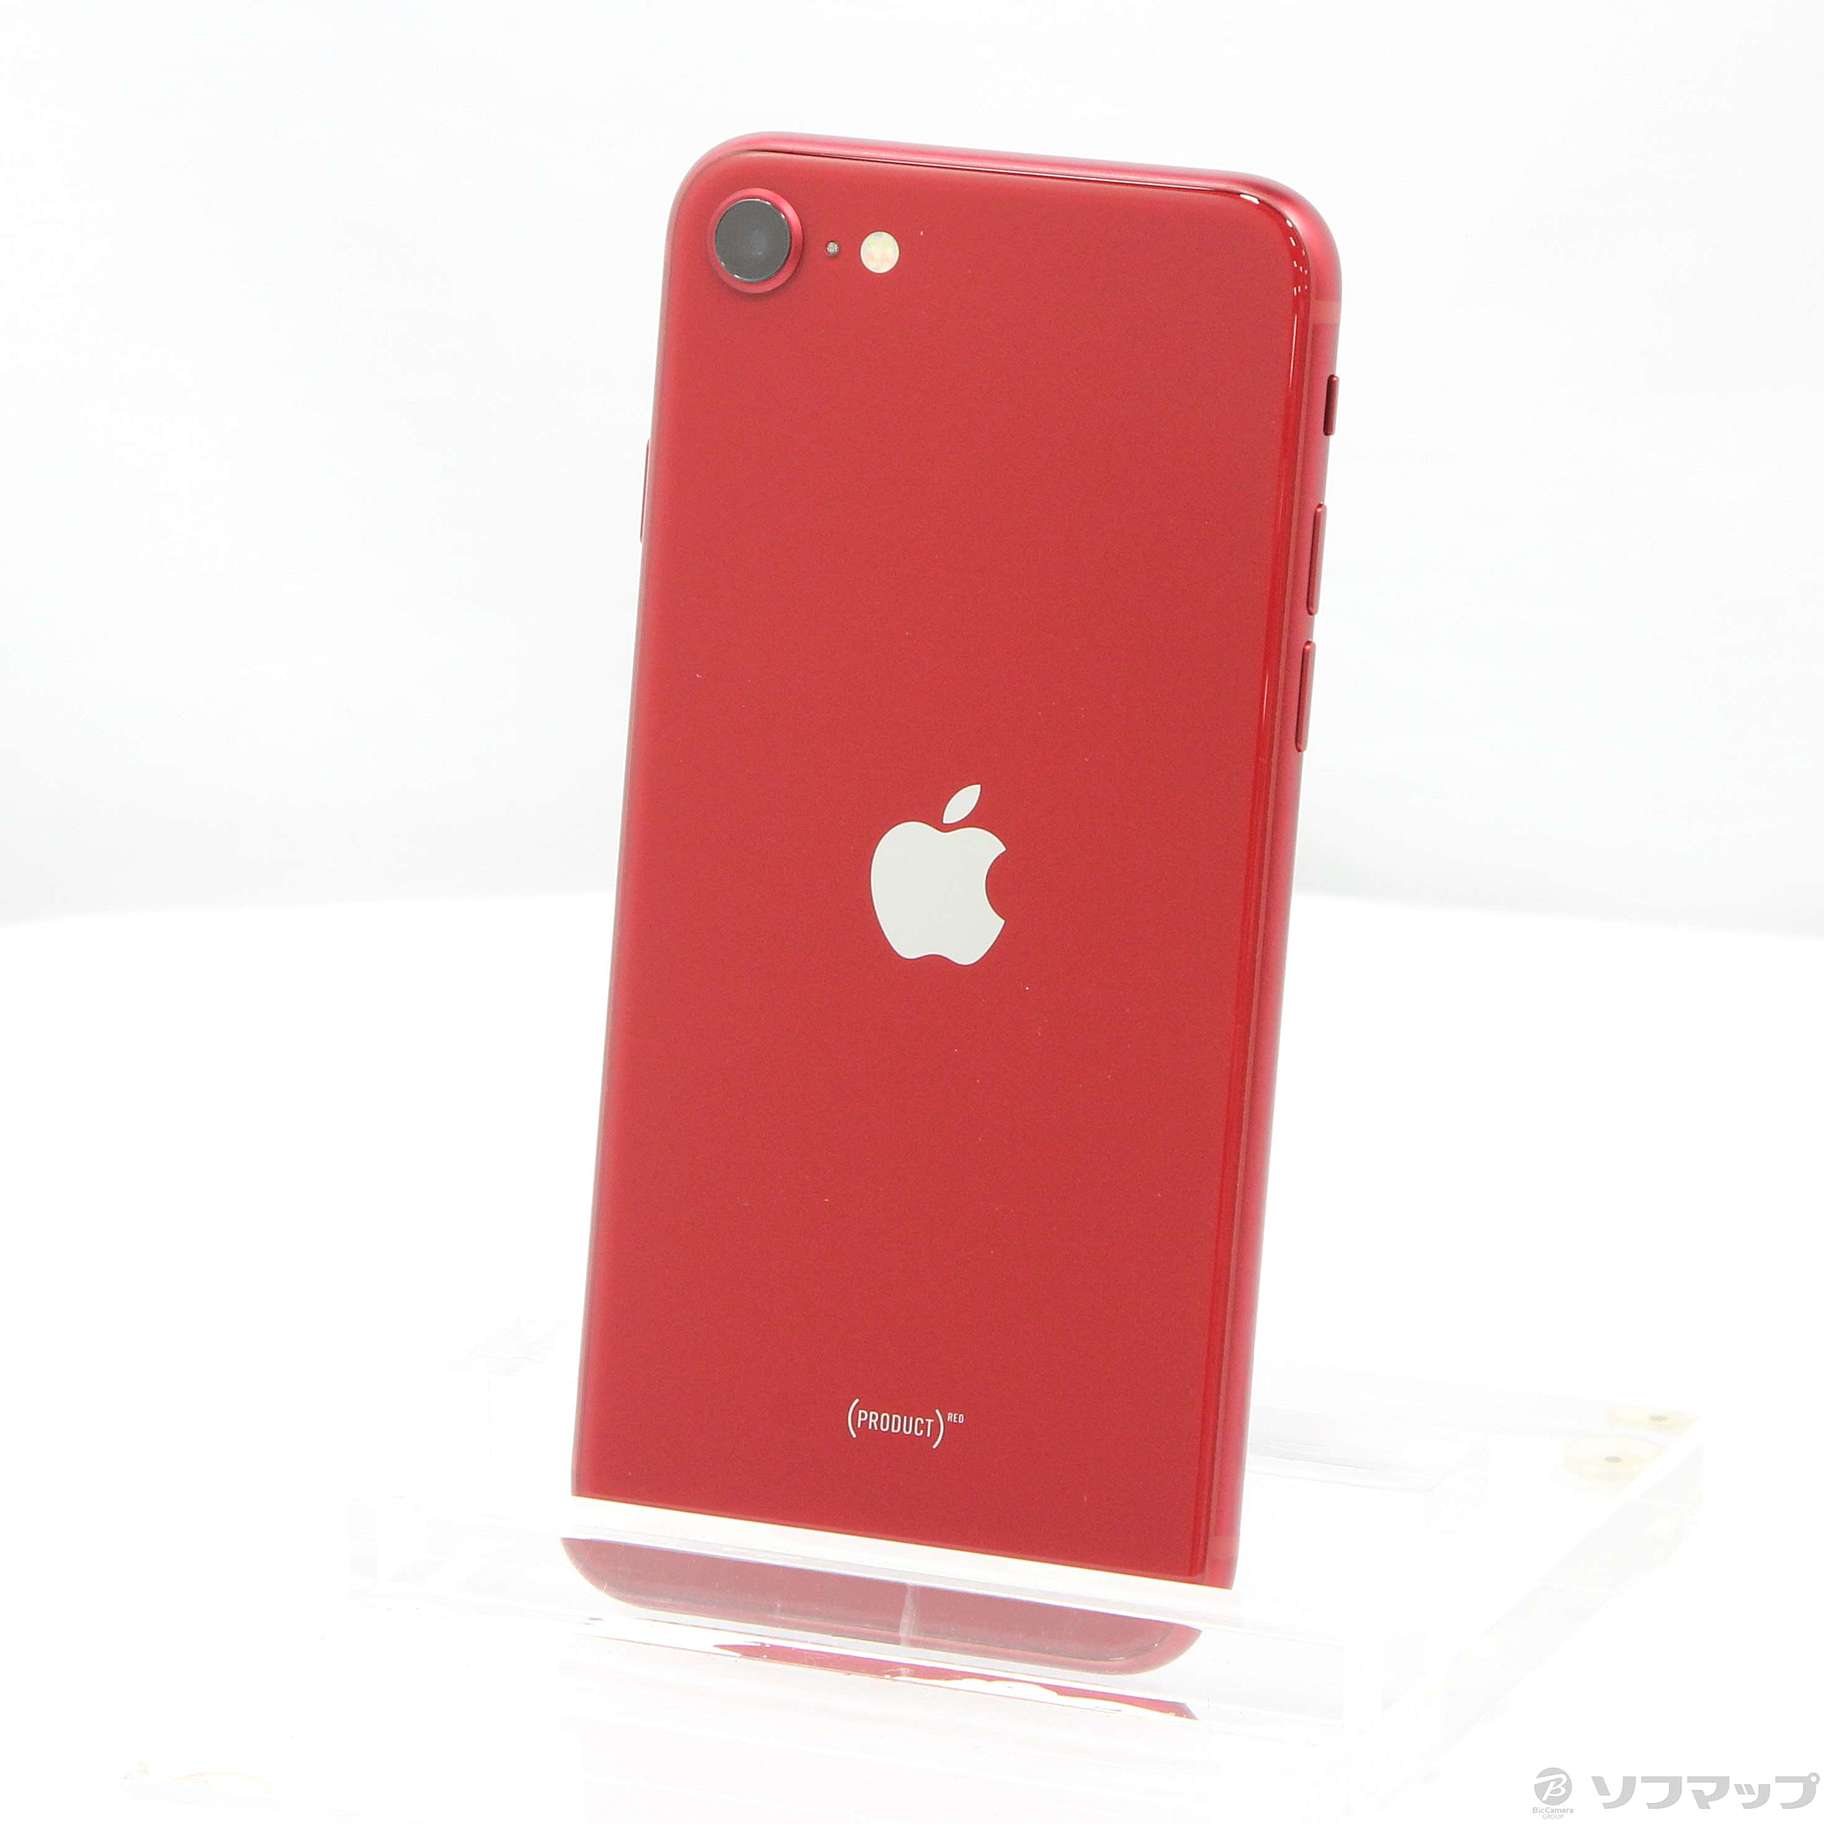 iPhone SE 3世代 RED 128GBスマートフォン/携帯電話 - スマートフォン本体